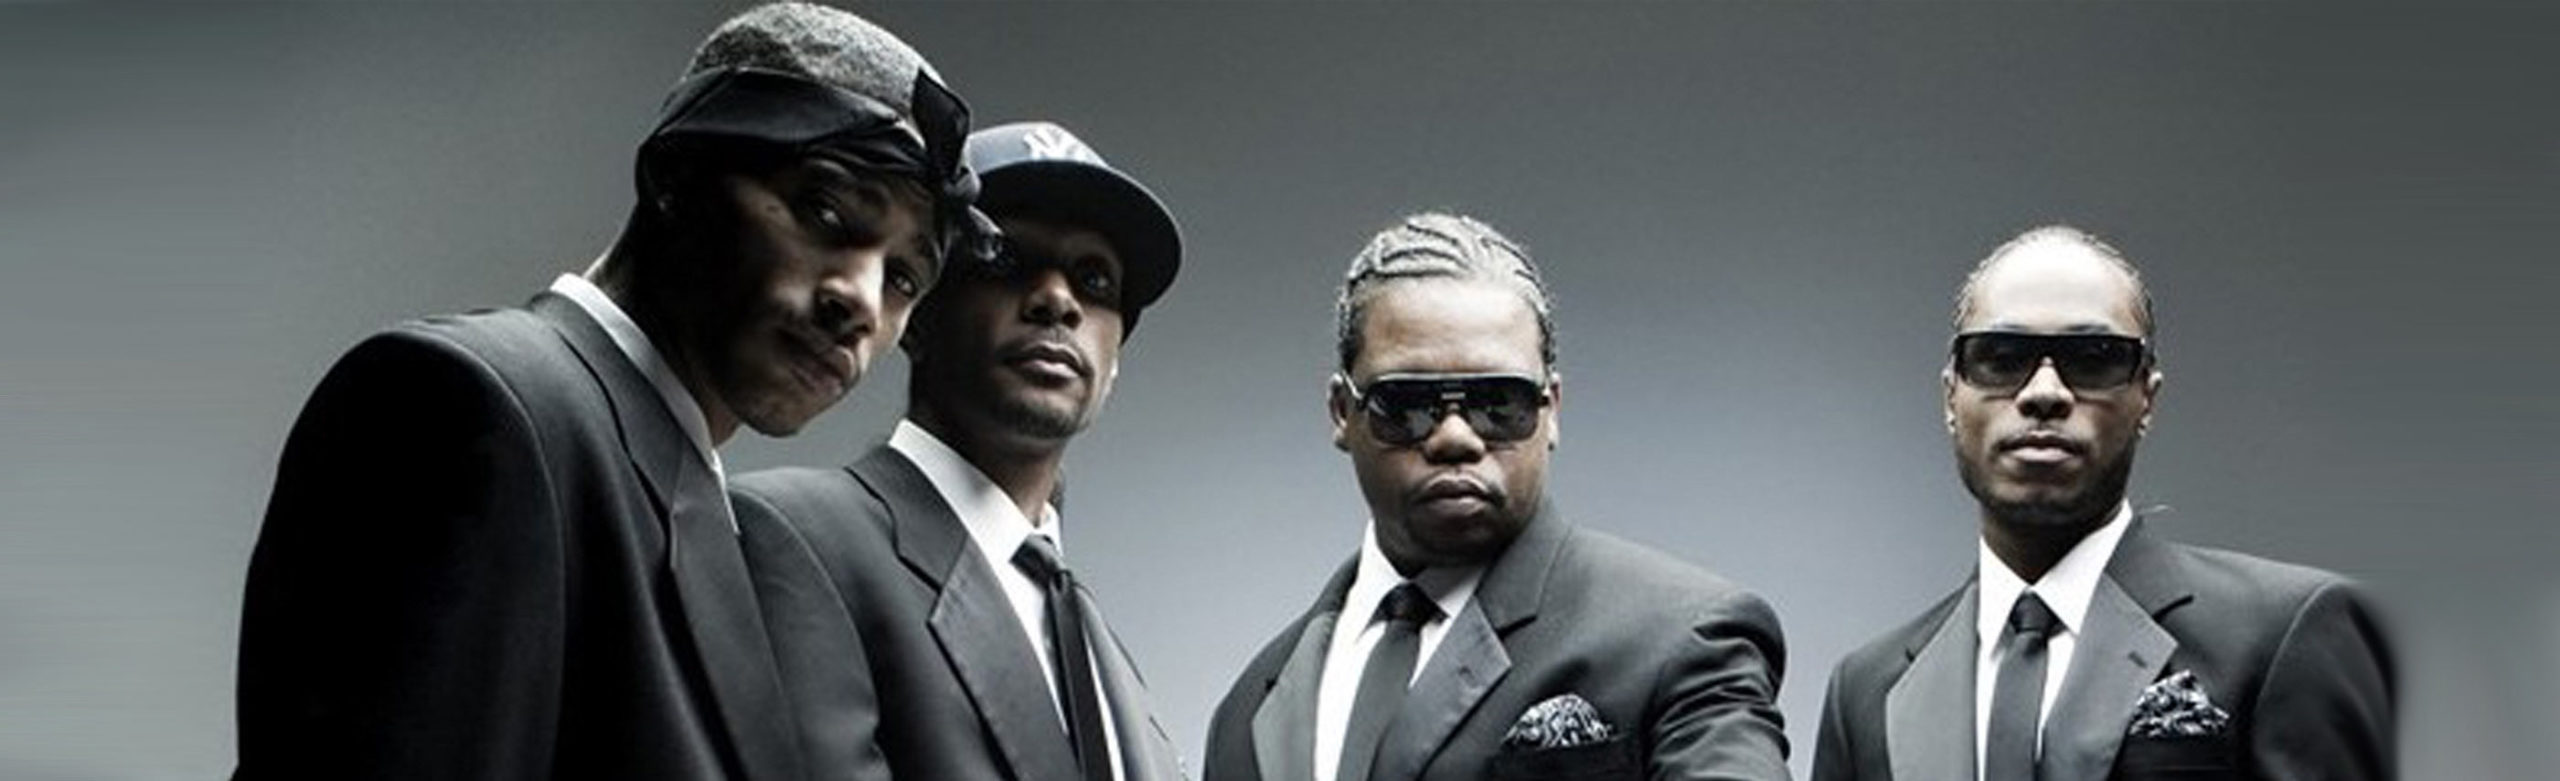 Bone Thugs N Harmony Add Bozeman Concert Image